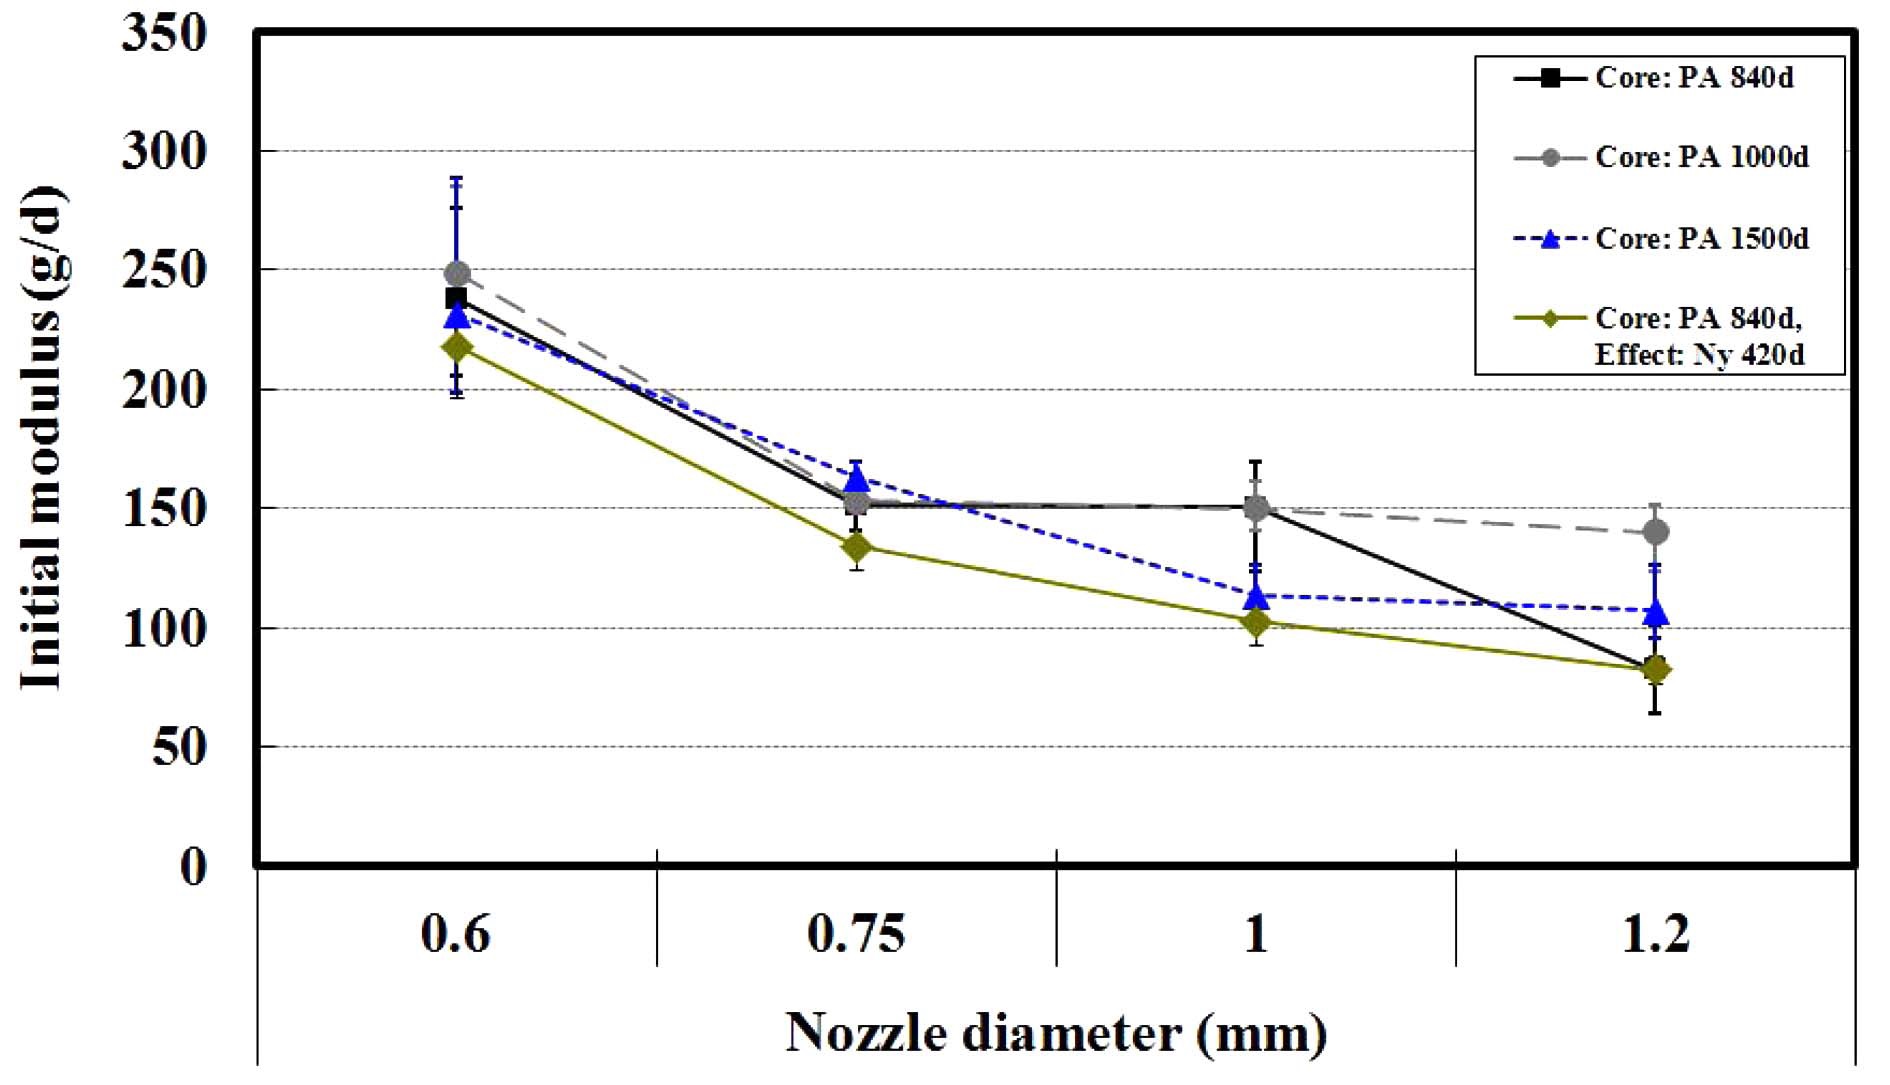 Initial modulus of specimens according to the ATY nozzle diameter.